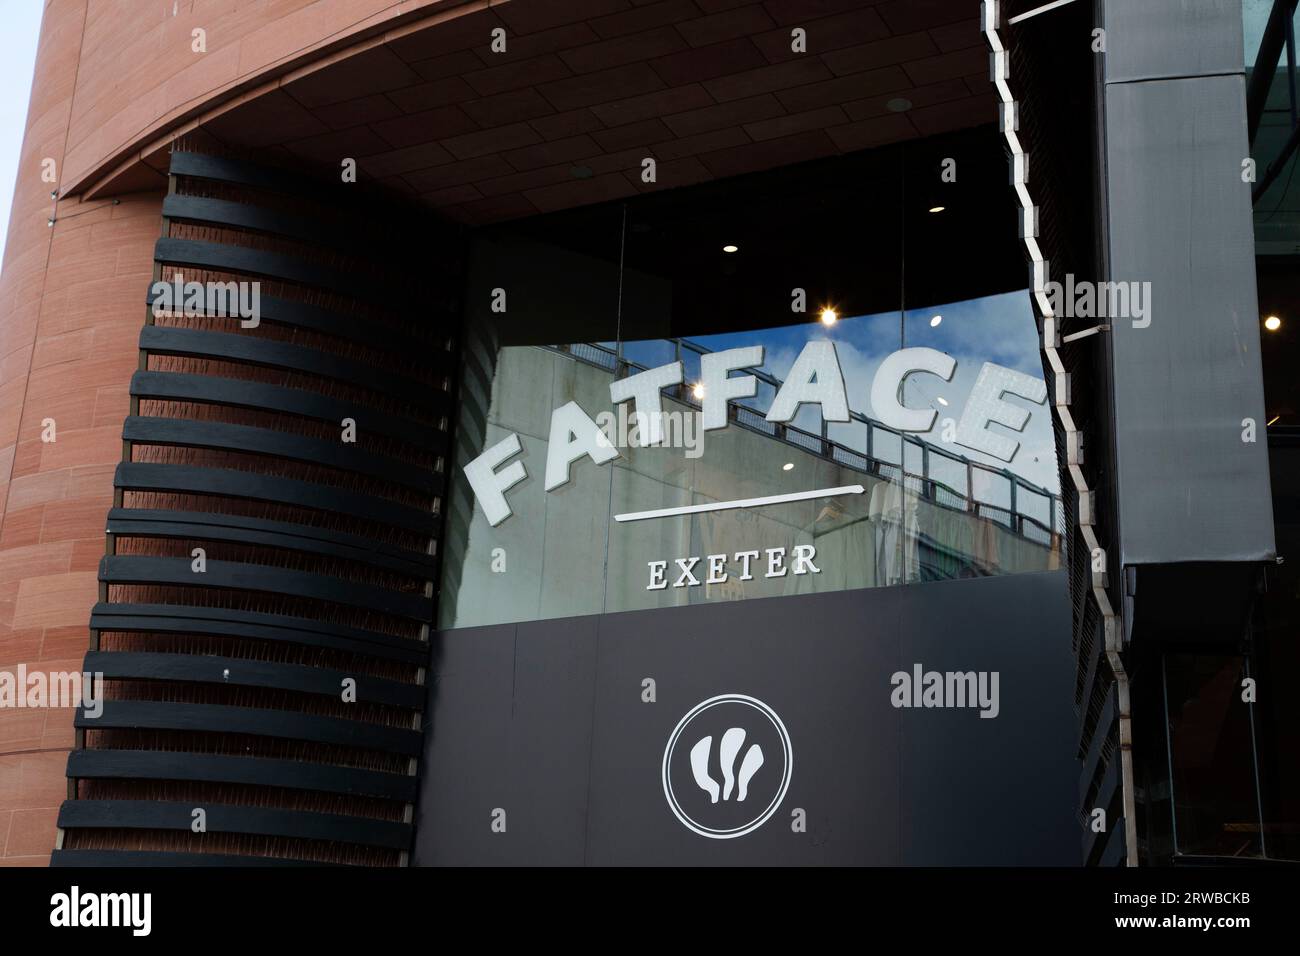 Fatface clothing shop front window signage Stock Photo